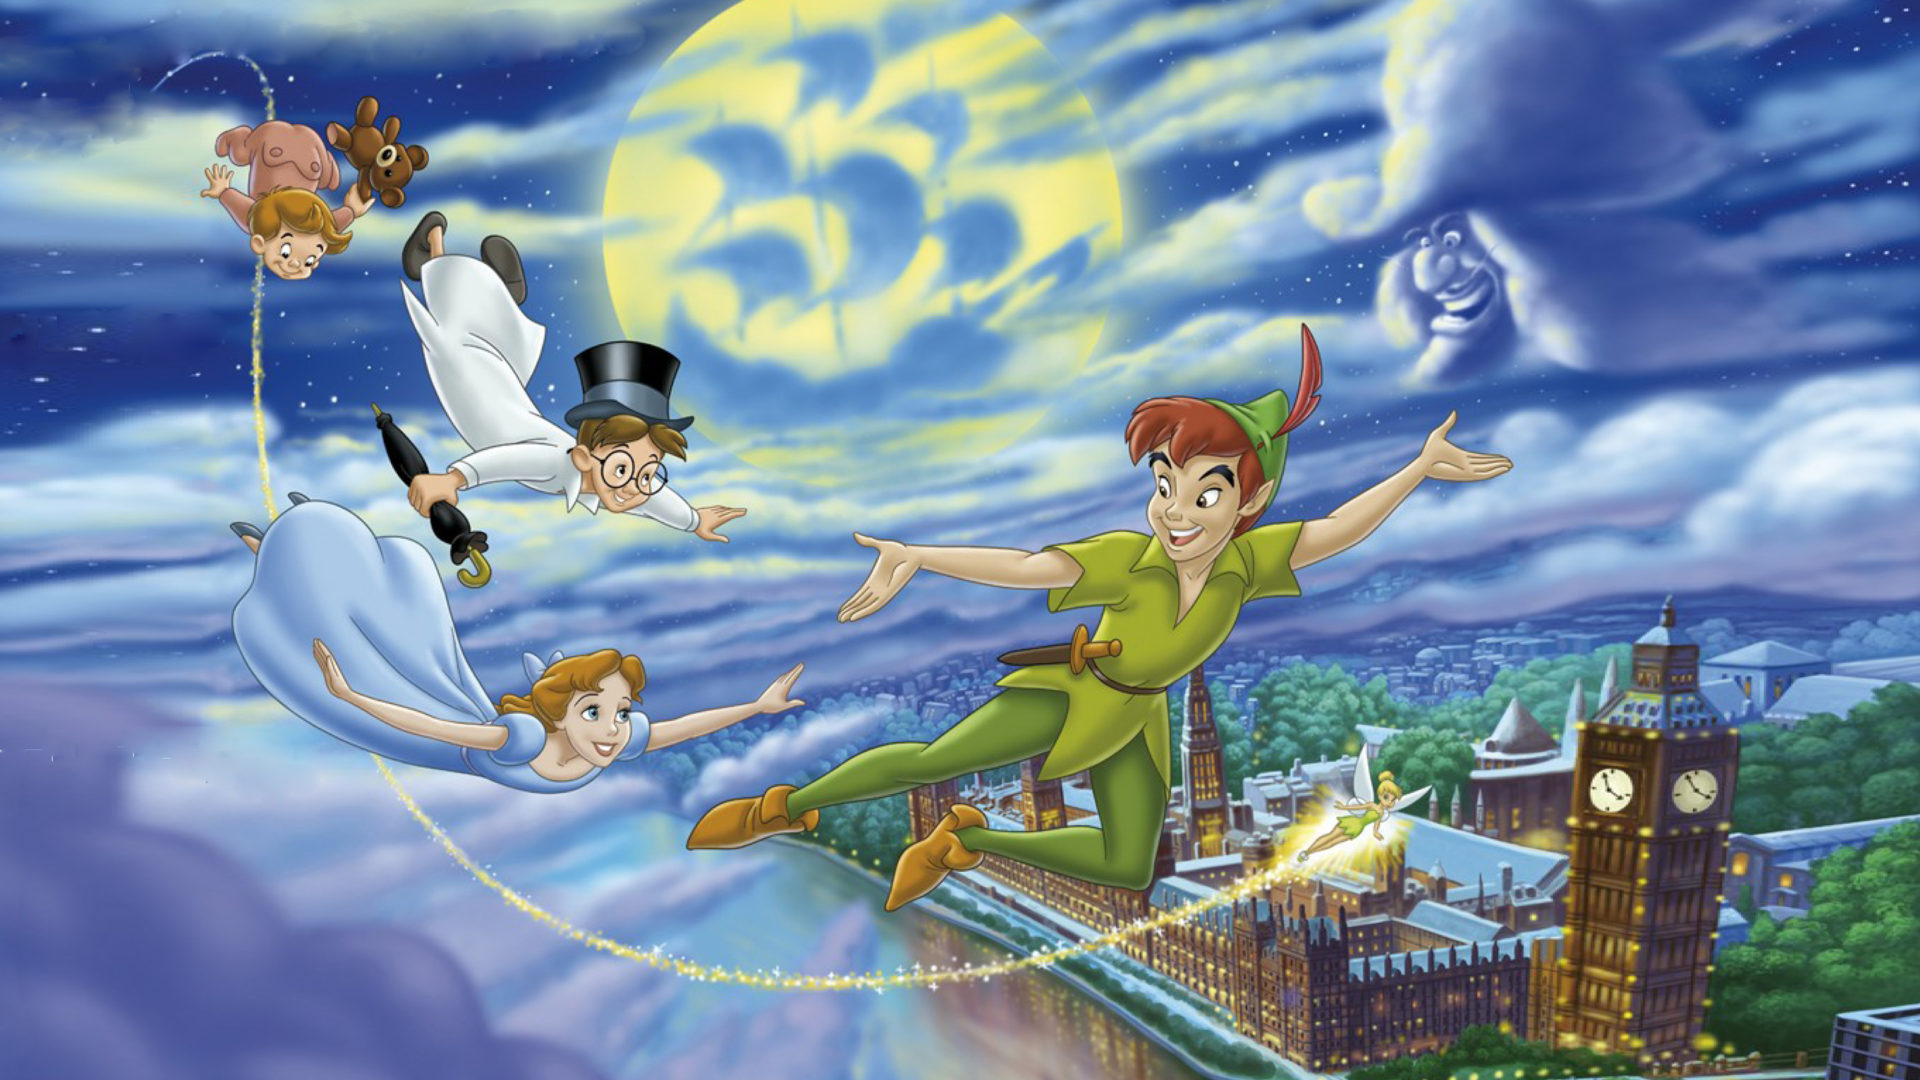 Disney Peter Pan Let's Over London Best Picture For Disney Art Wallpaper HD 3840x2400, Wallpaper13.com